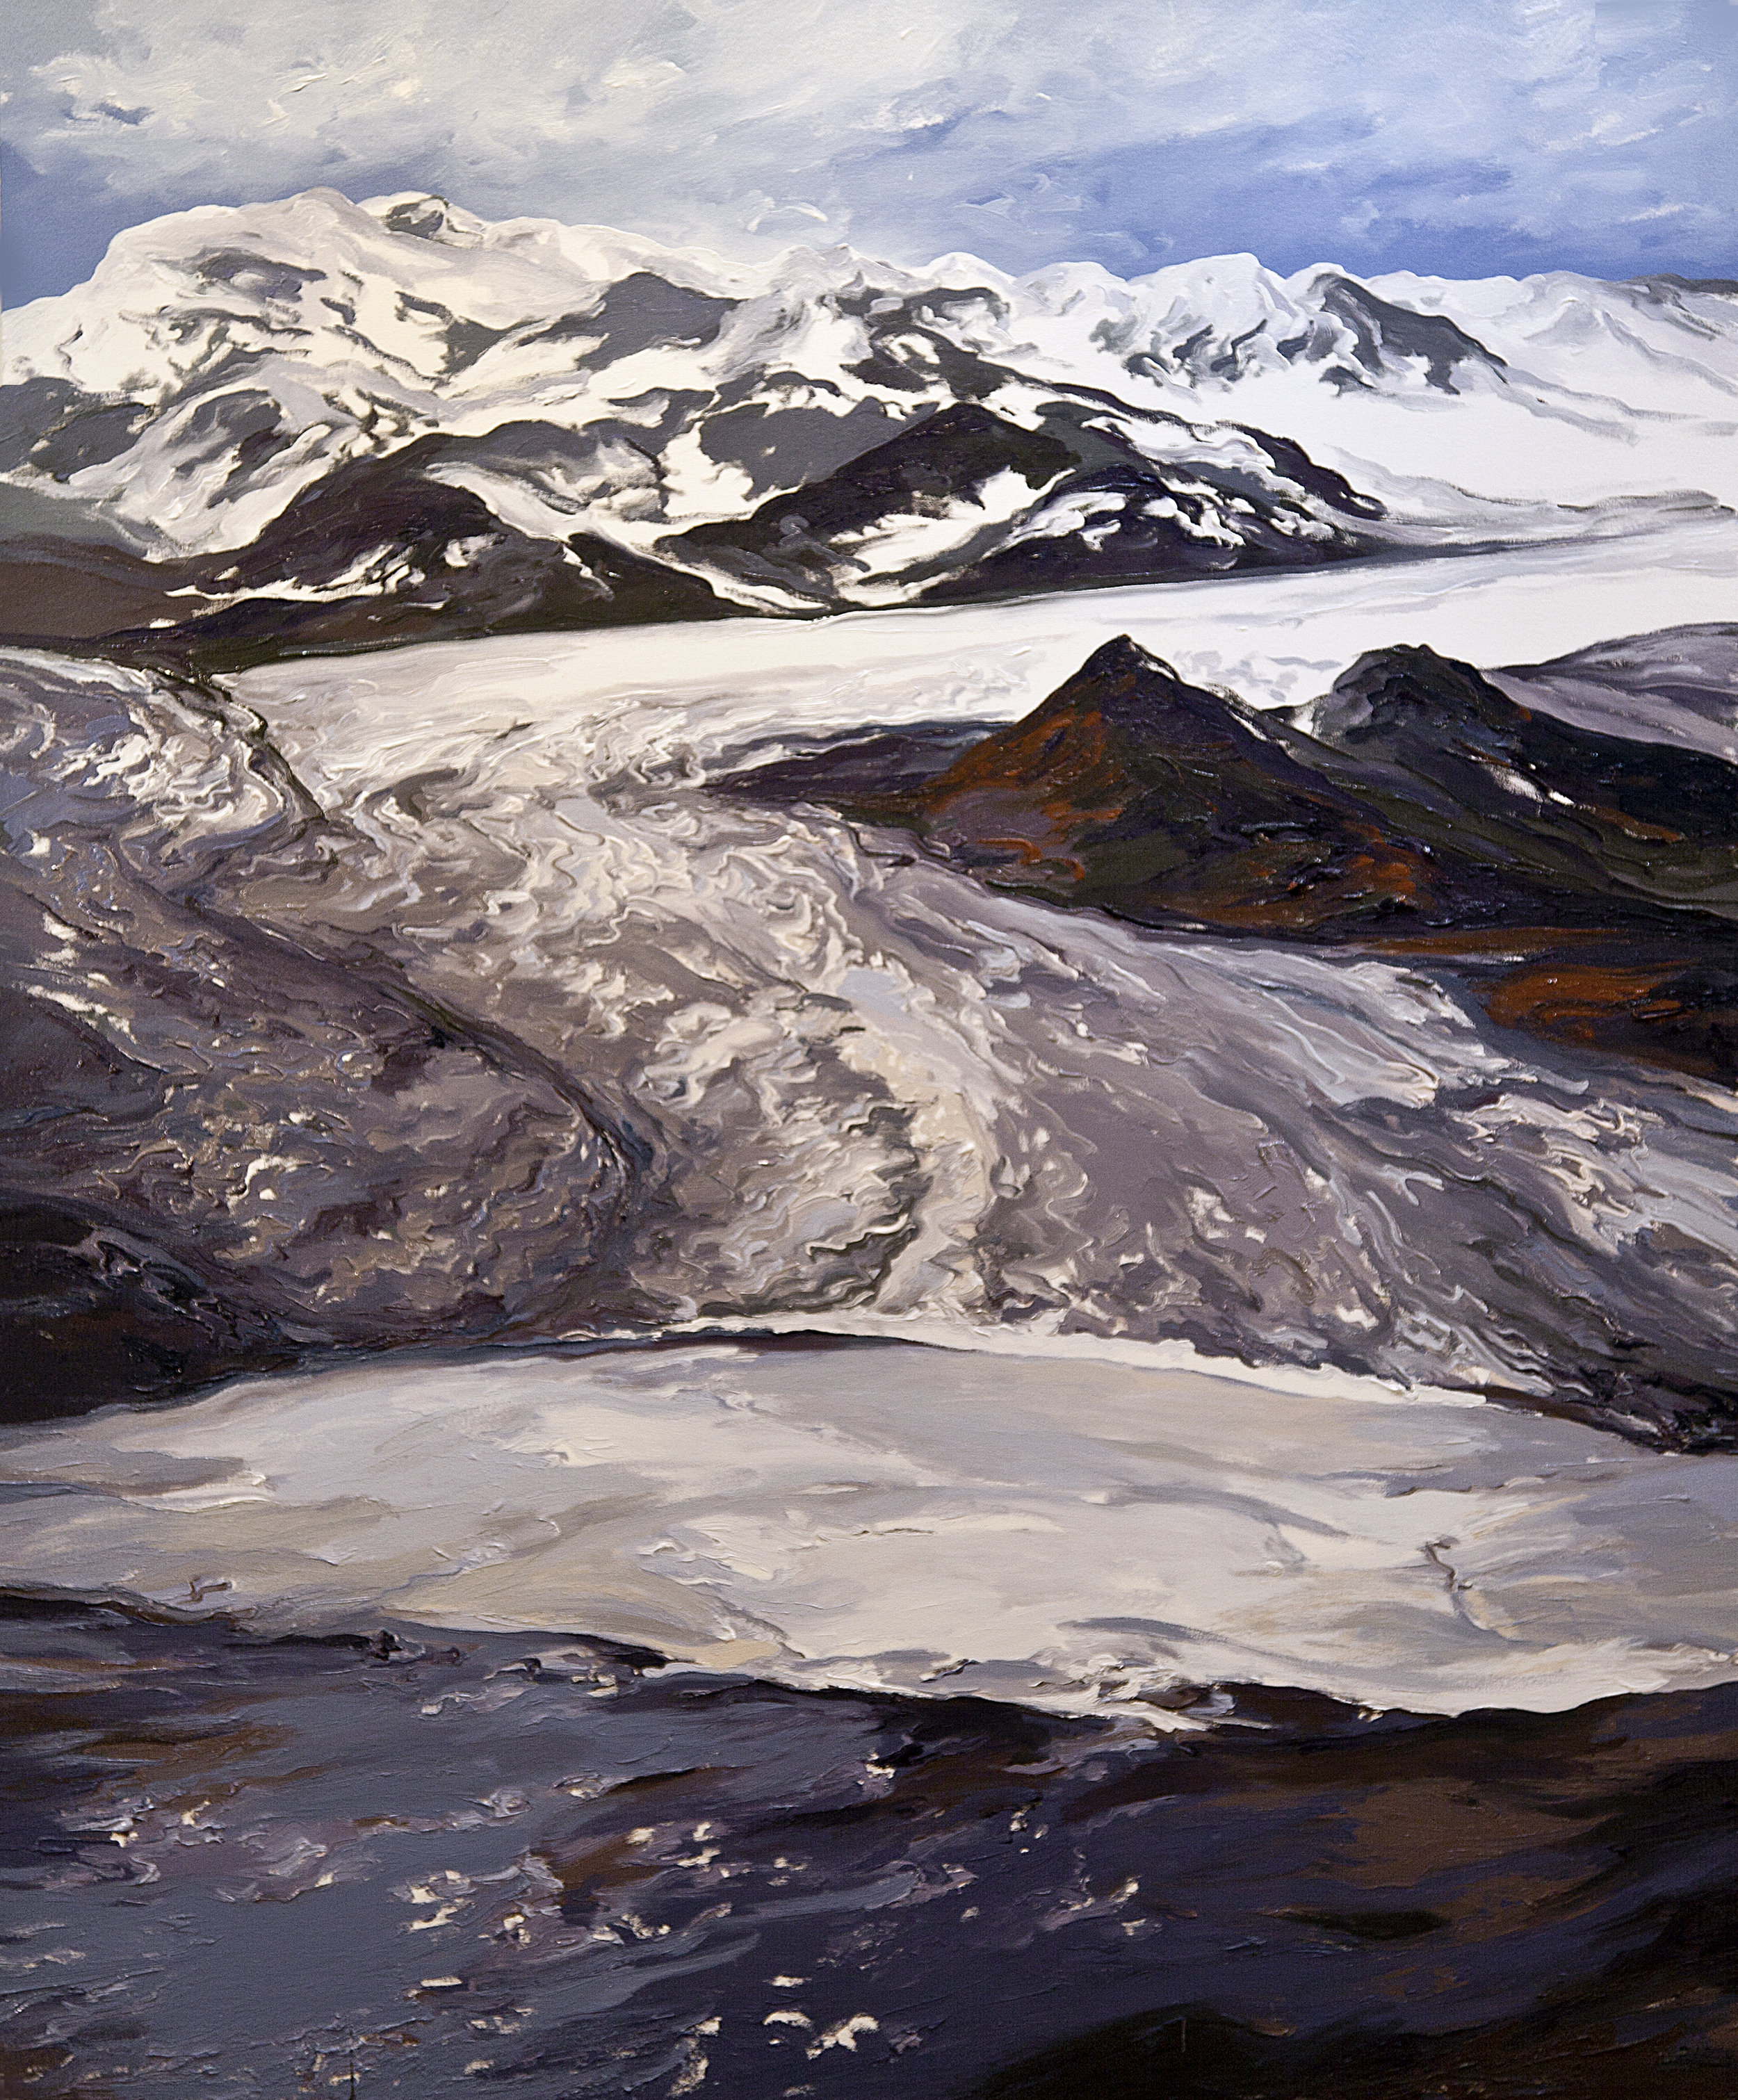 Columbia Glacier Triptych I (figure 2), 1986, after Robert M. Krimmel